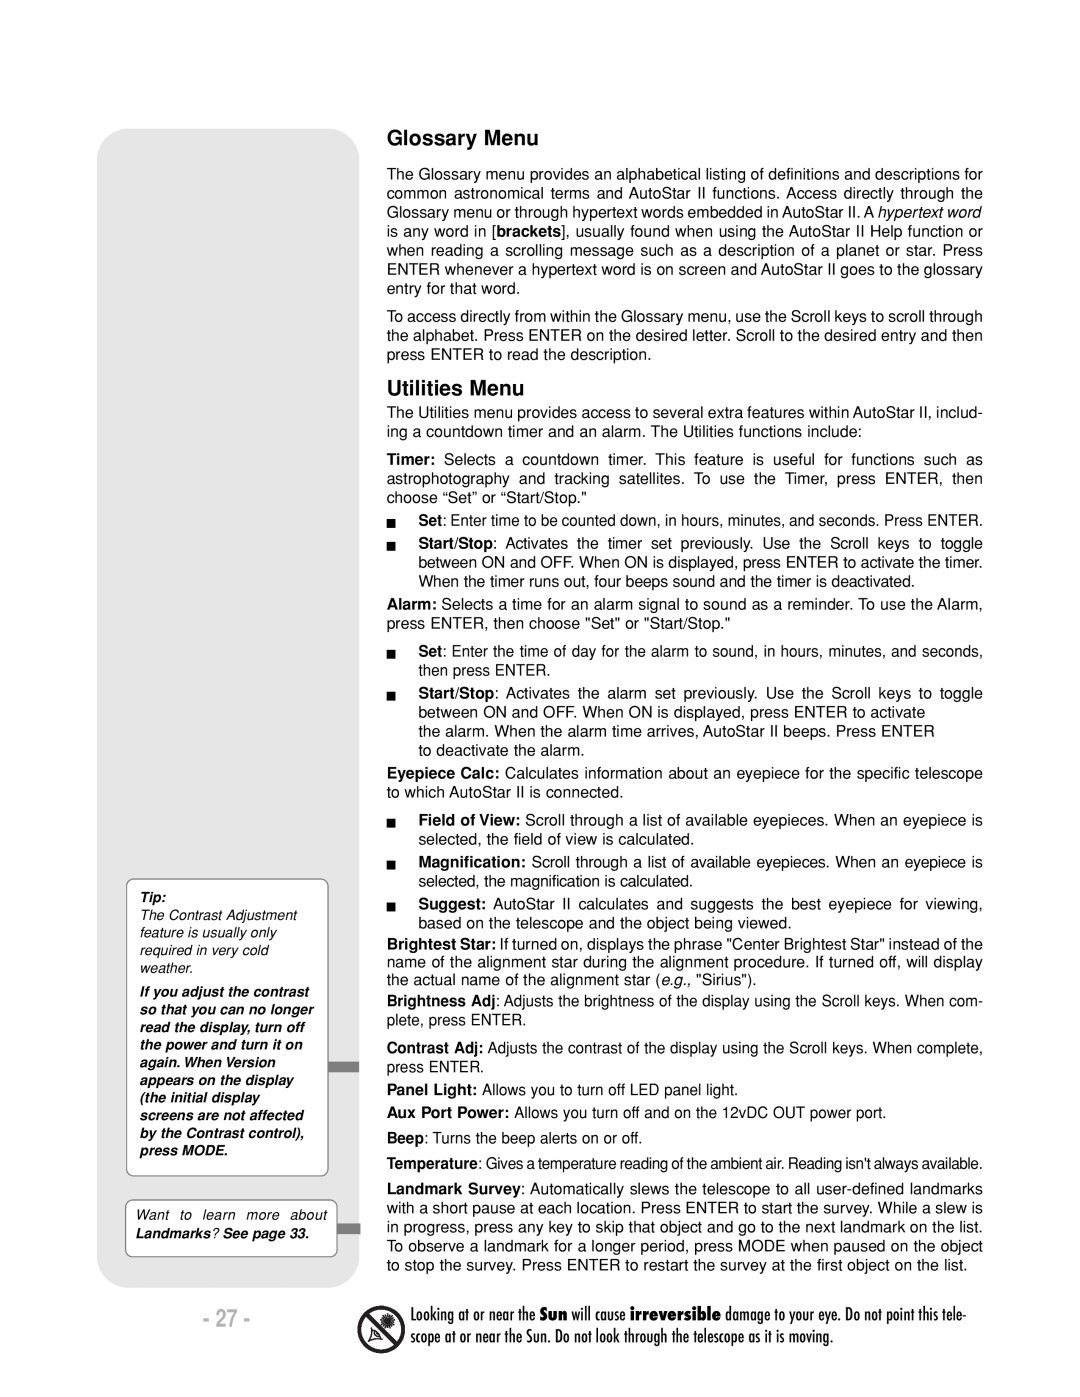 Meade LX200 R instruction manual Glossary Menu, Utilities Menu 